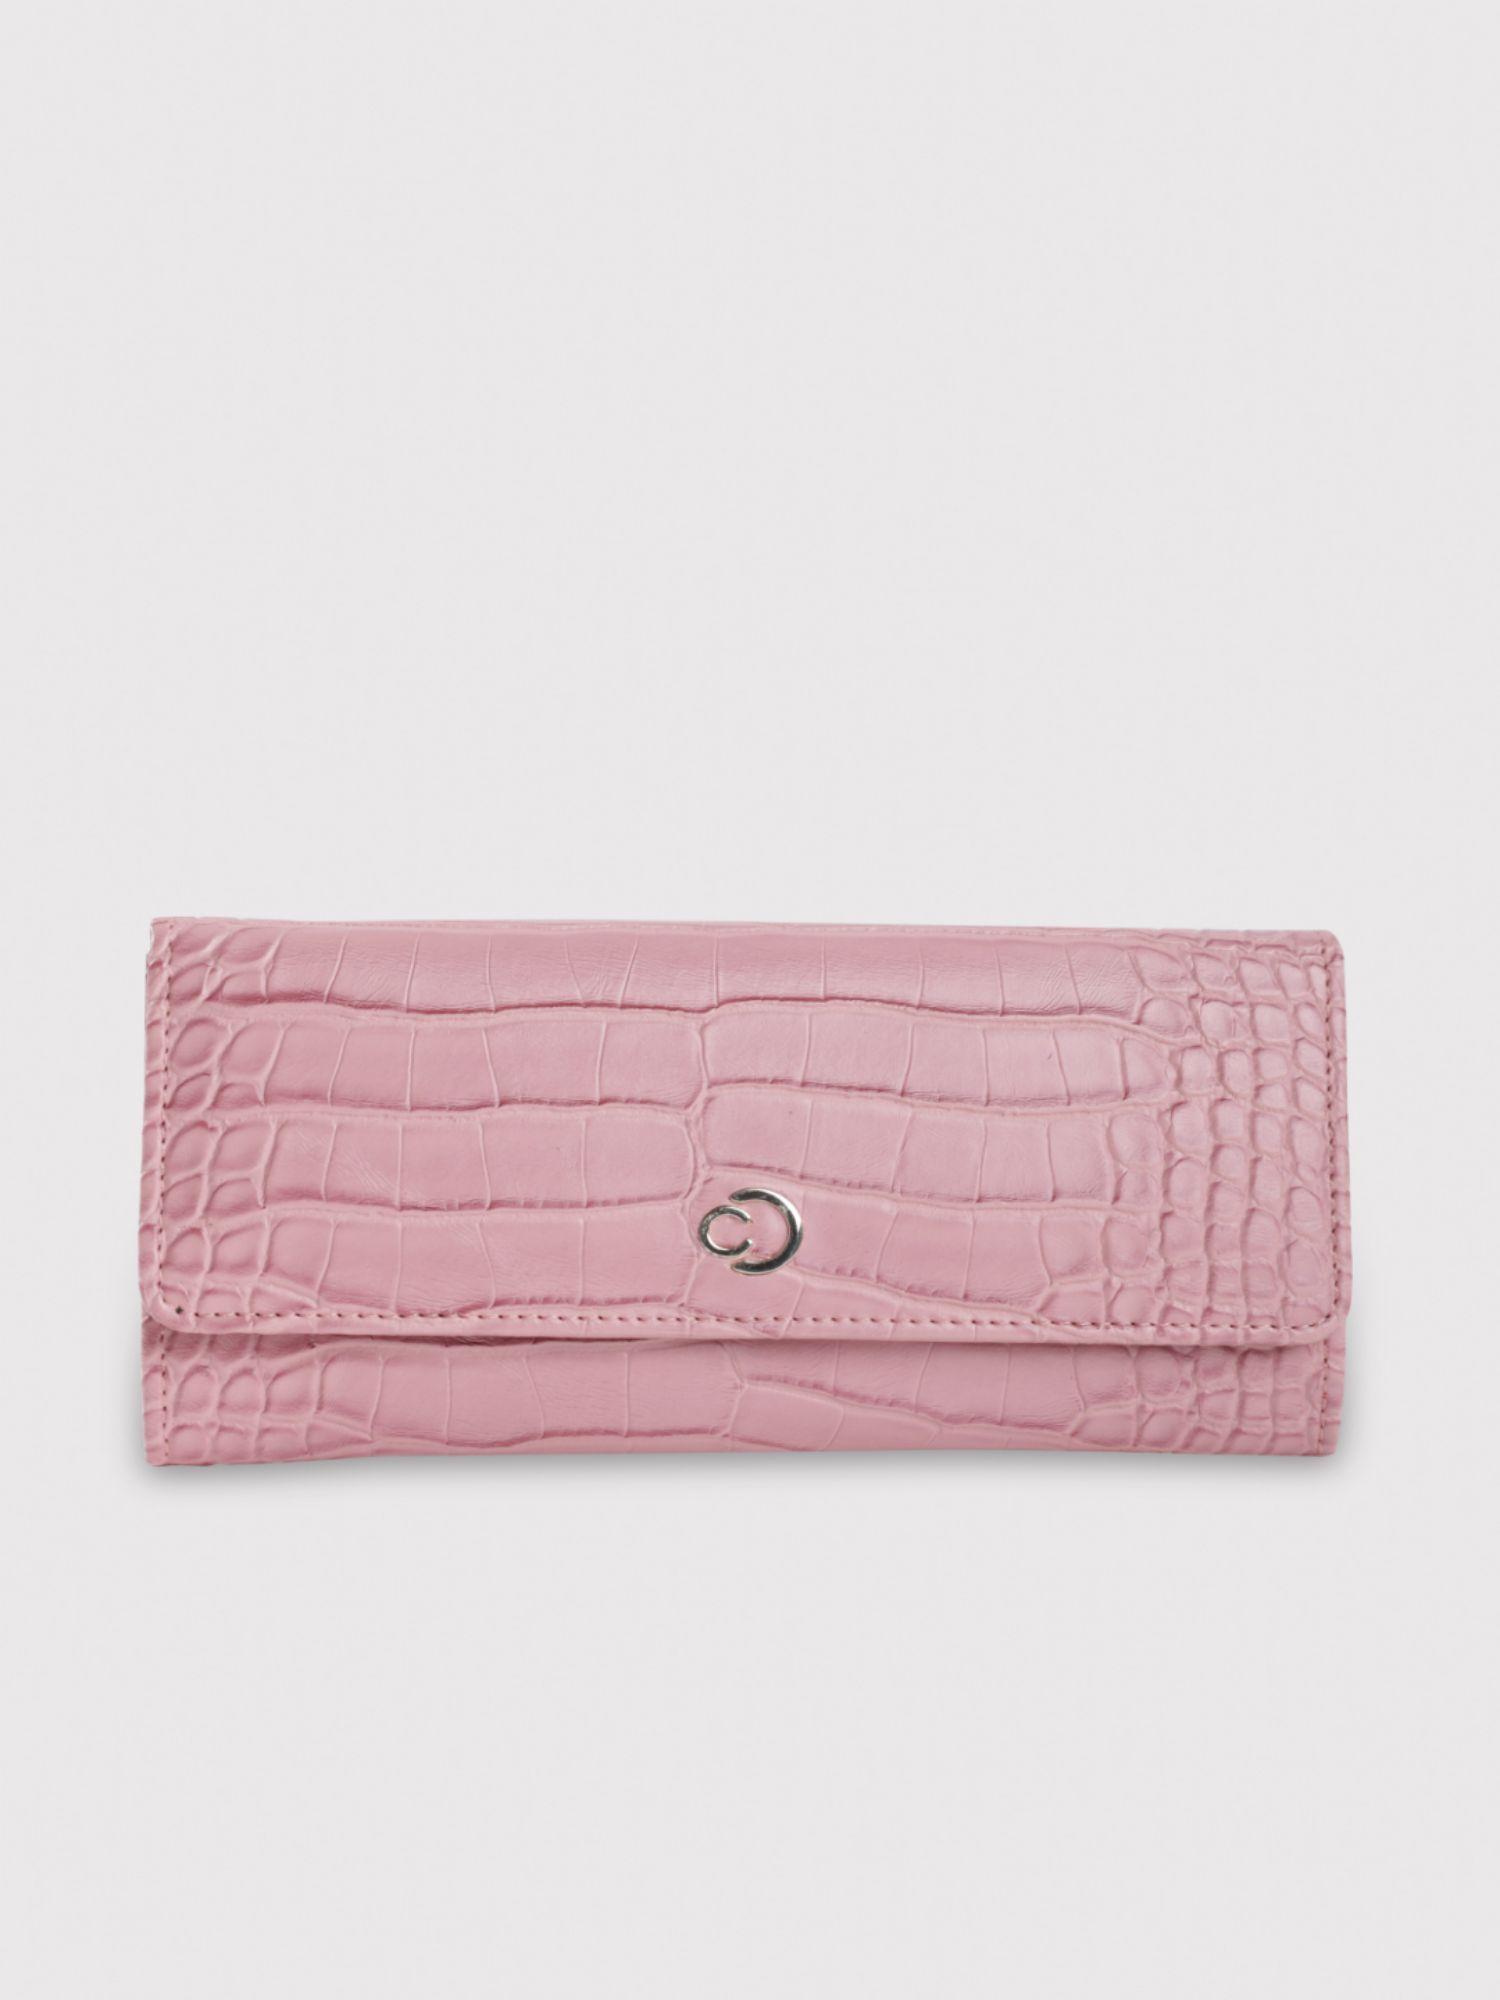 luna wallet flap wallet pink